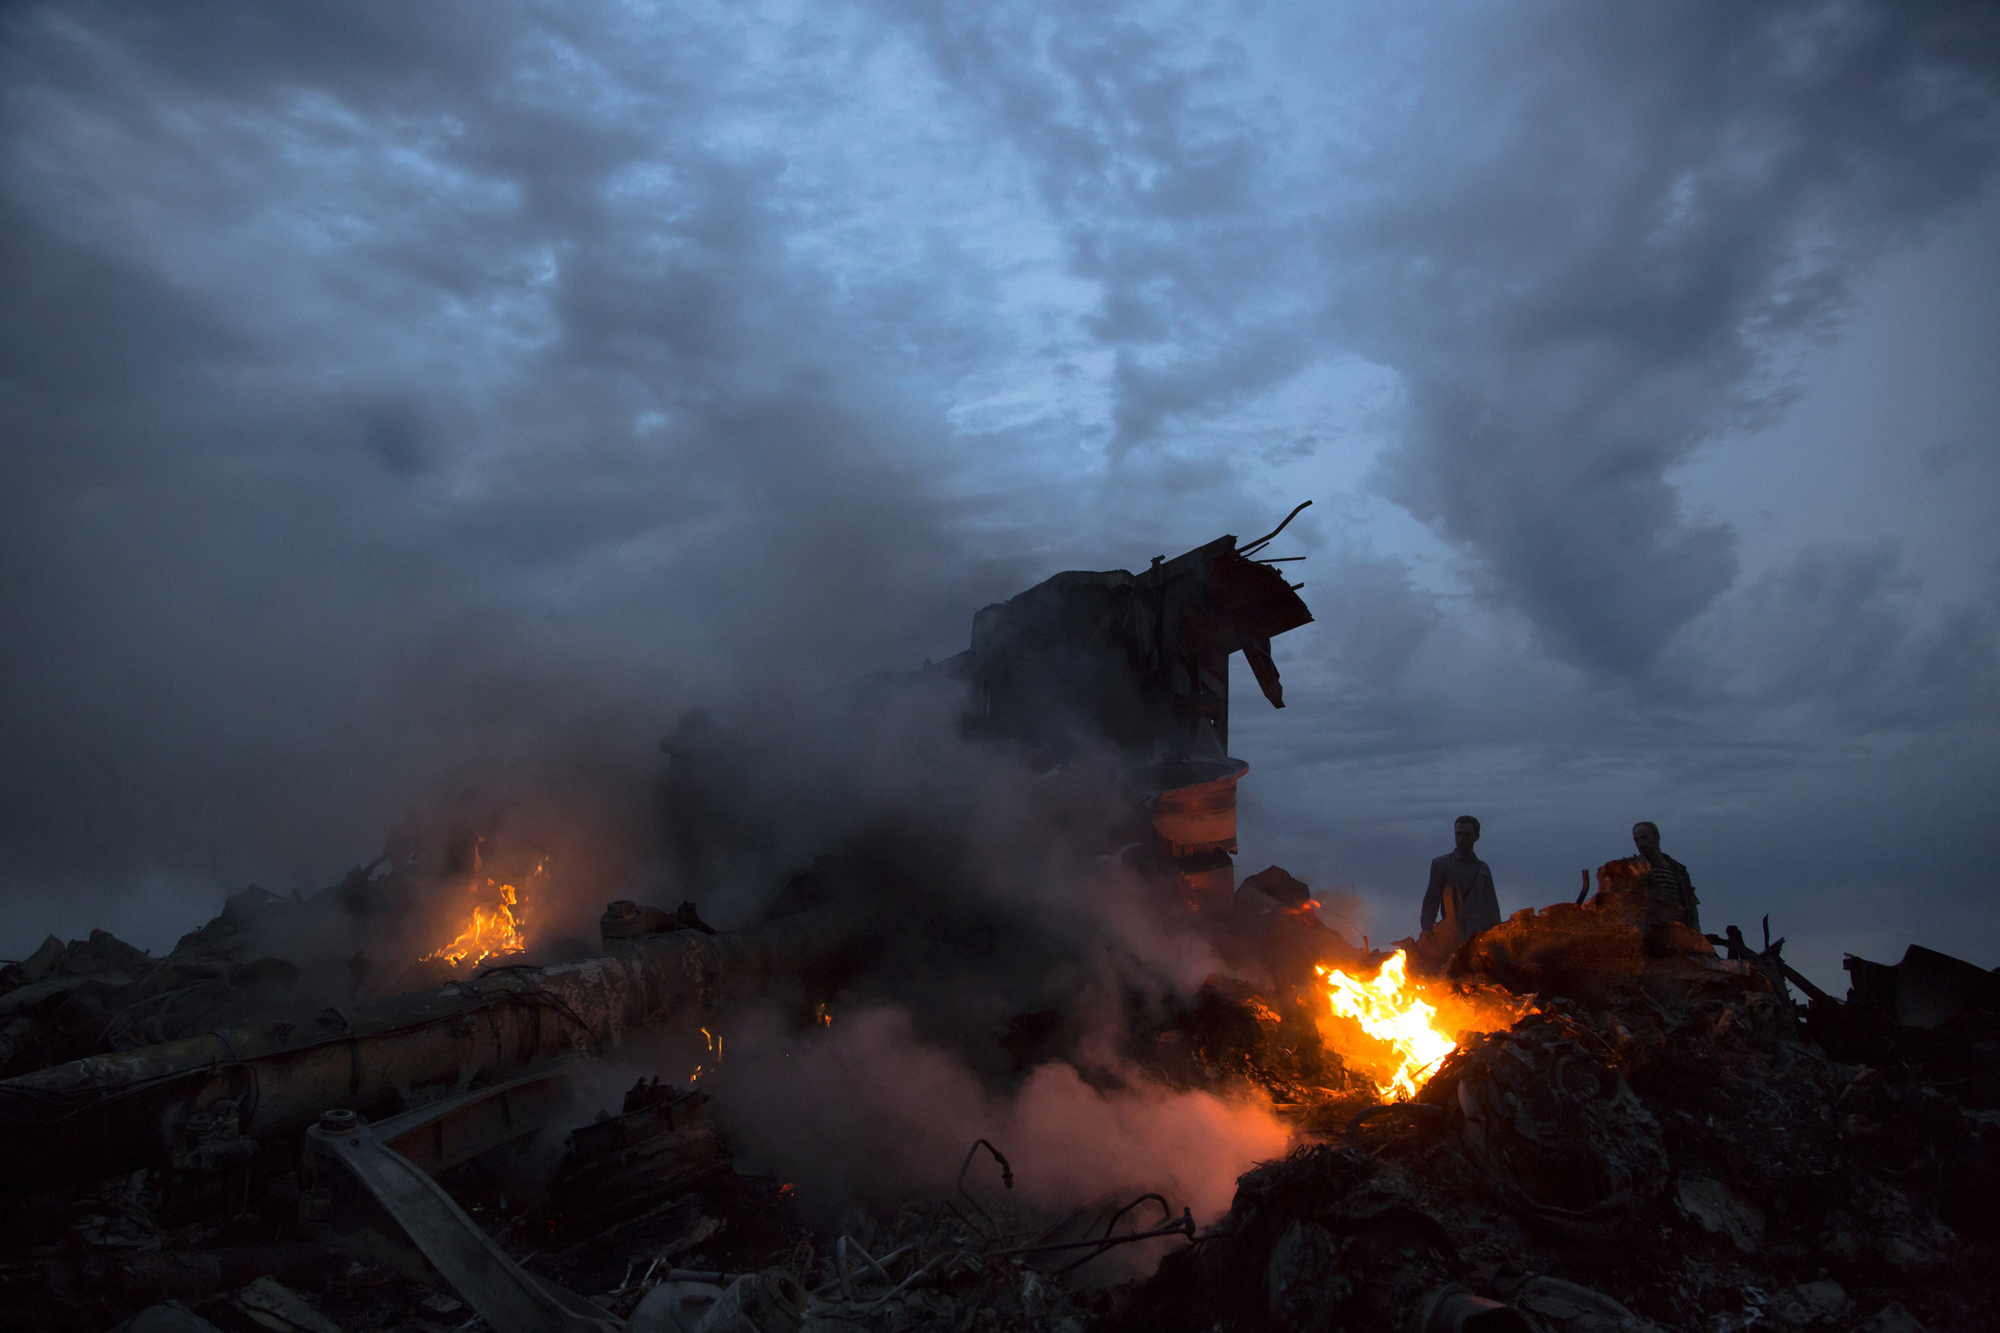 People walk amongst the debris at the crash site of a passenger plane near the village of Grabovo, Ukraine, July 17, 2014.